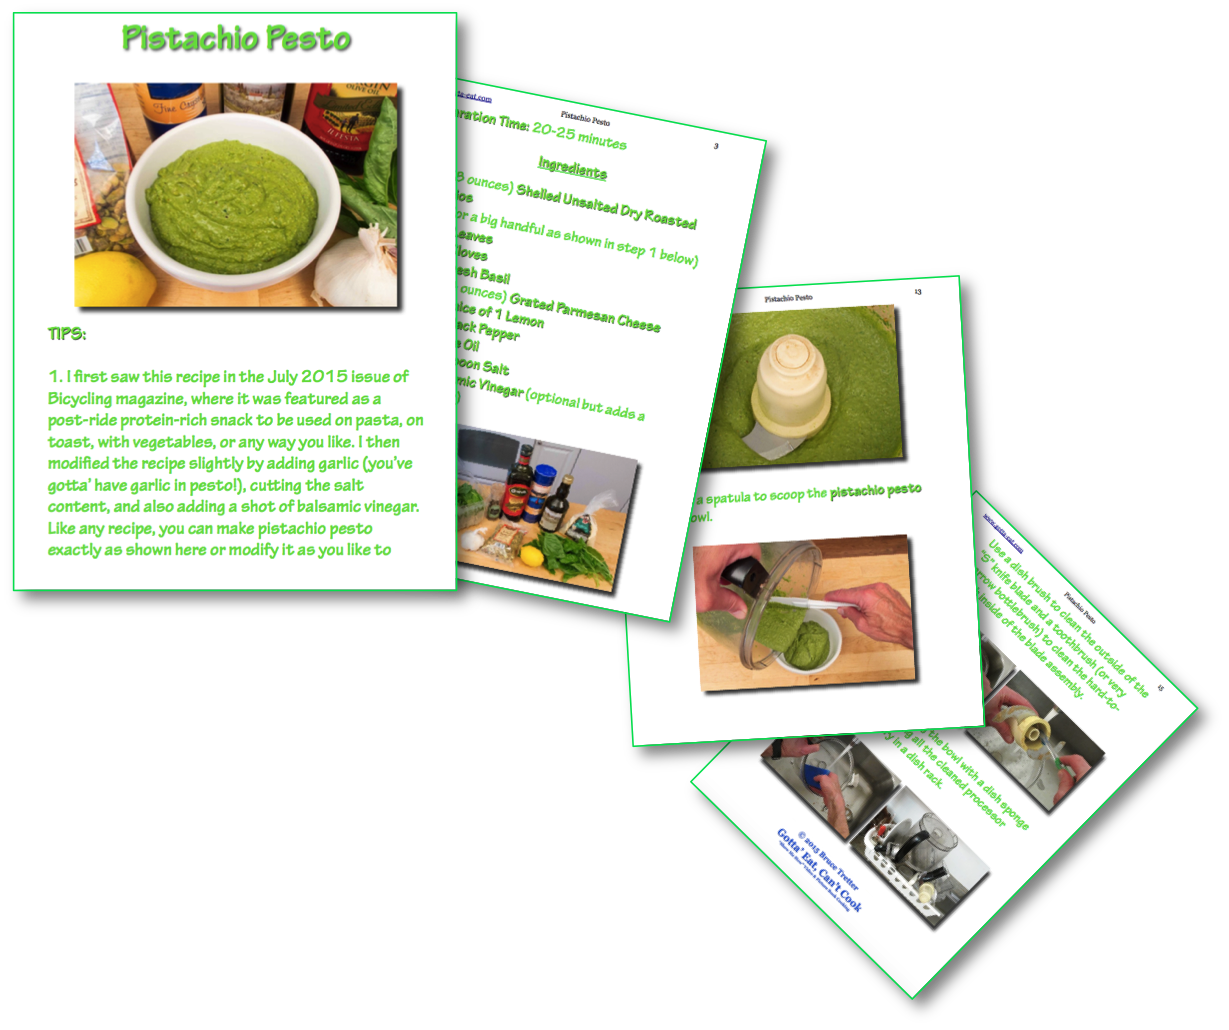 Pistachio Pesto Picture Book Recipe